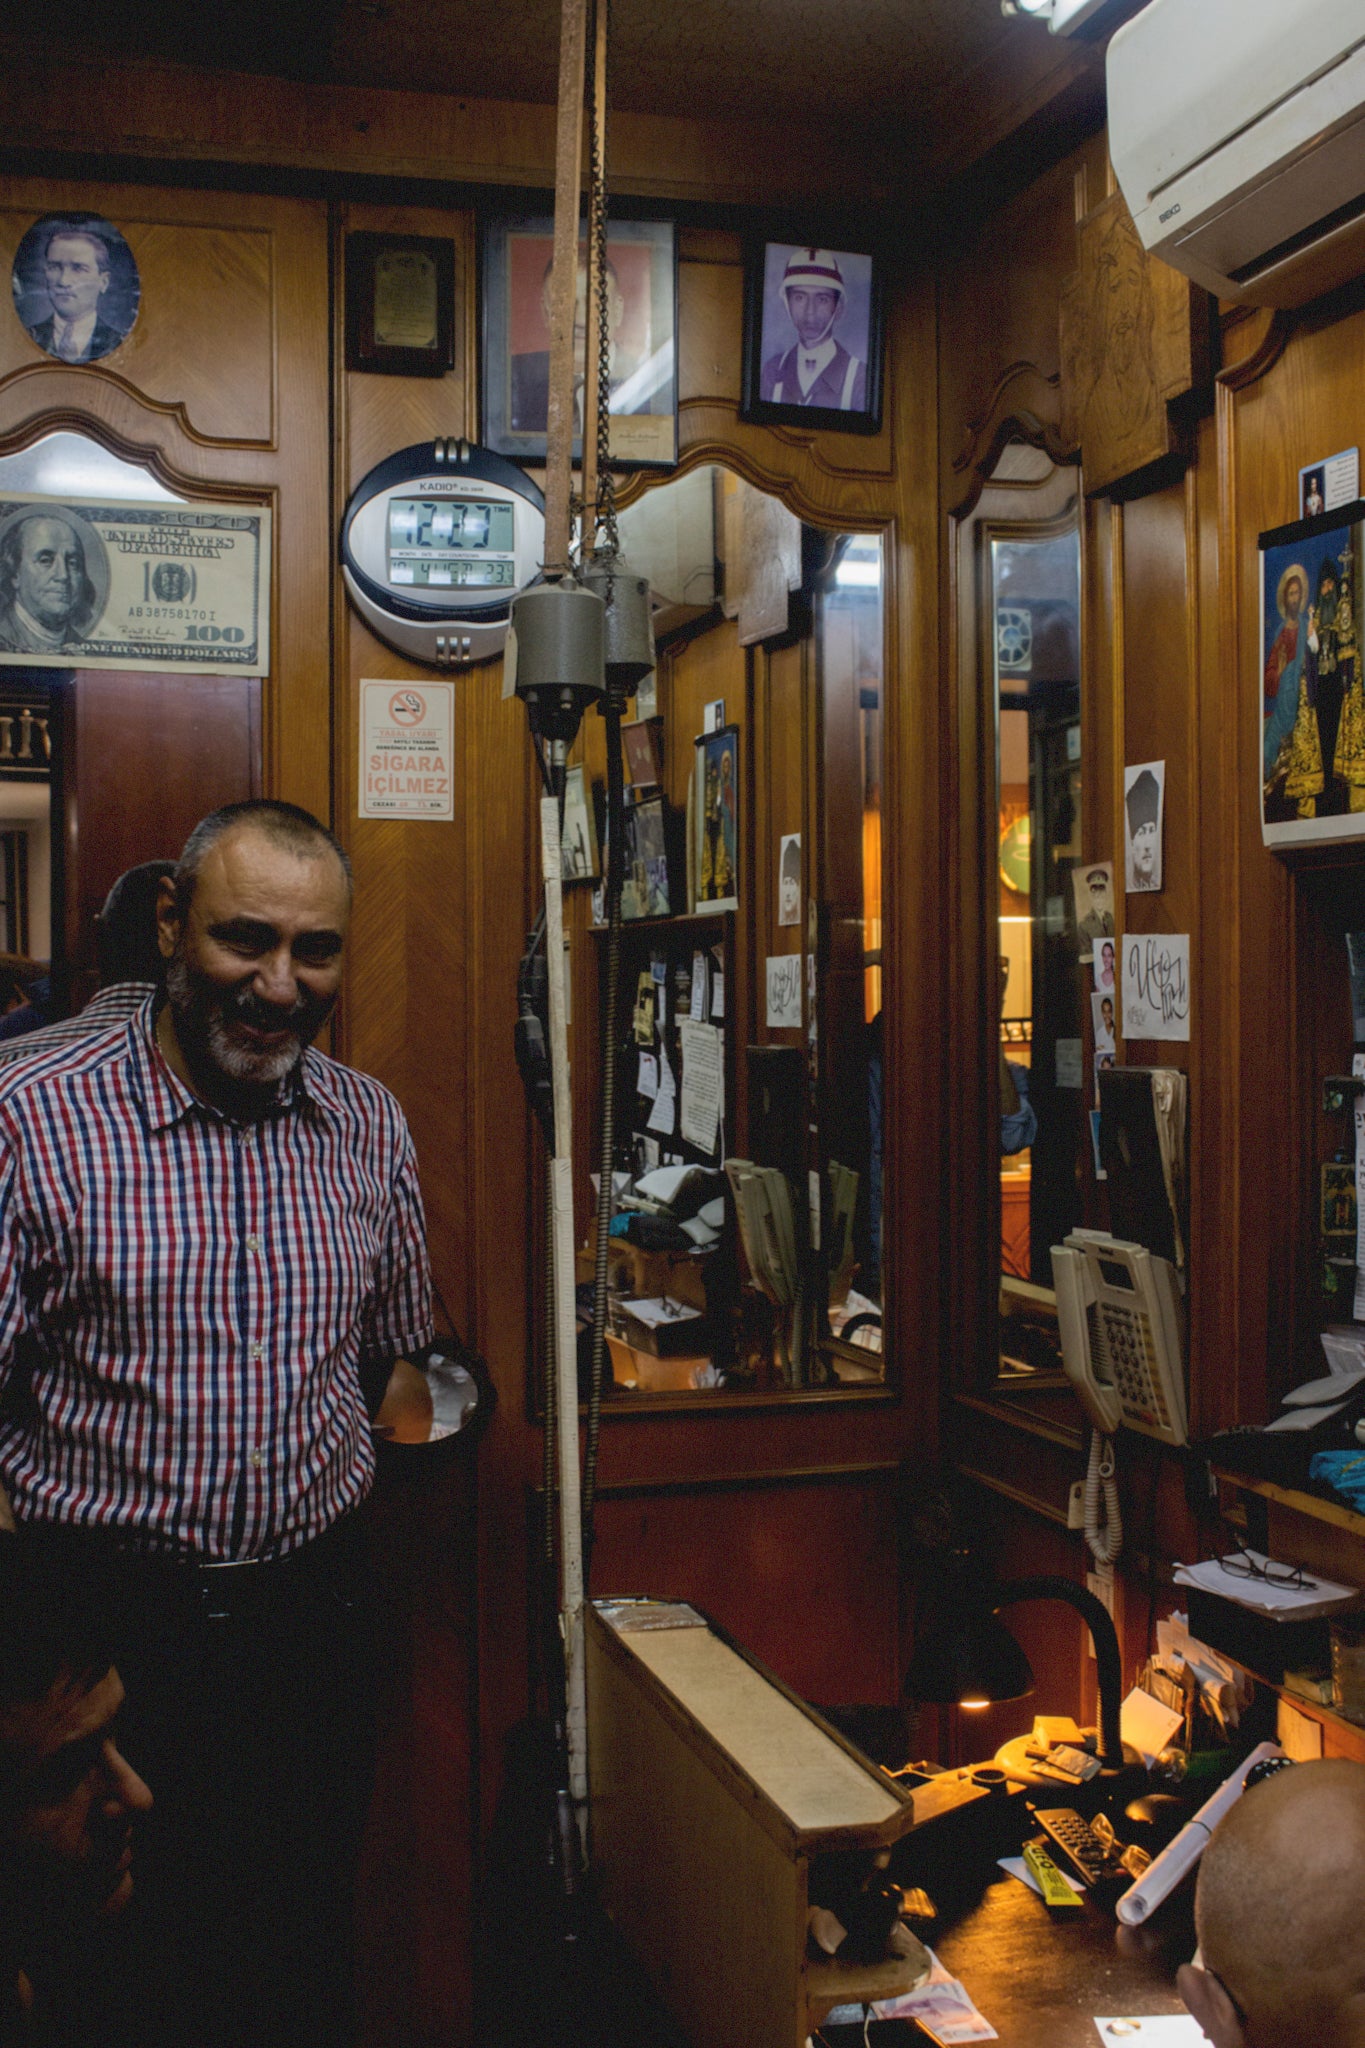 Sevan is one of the last hand-engravers of silver in the Bazaar.